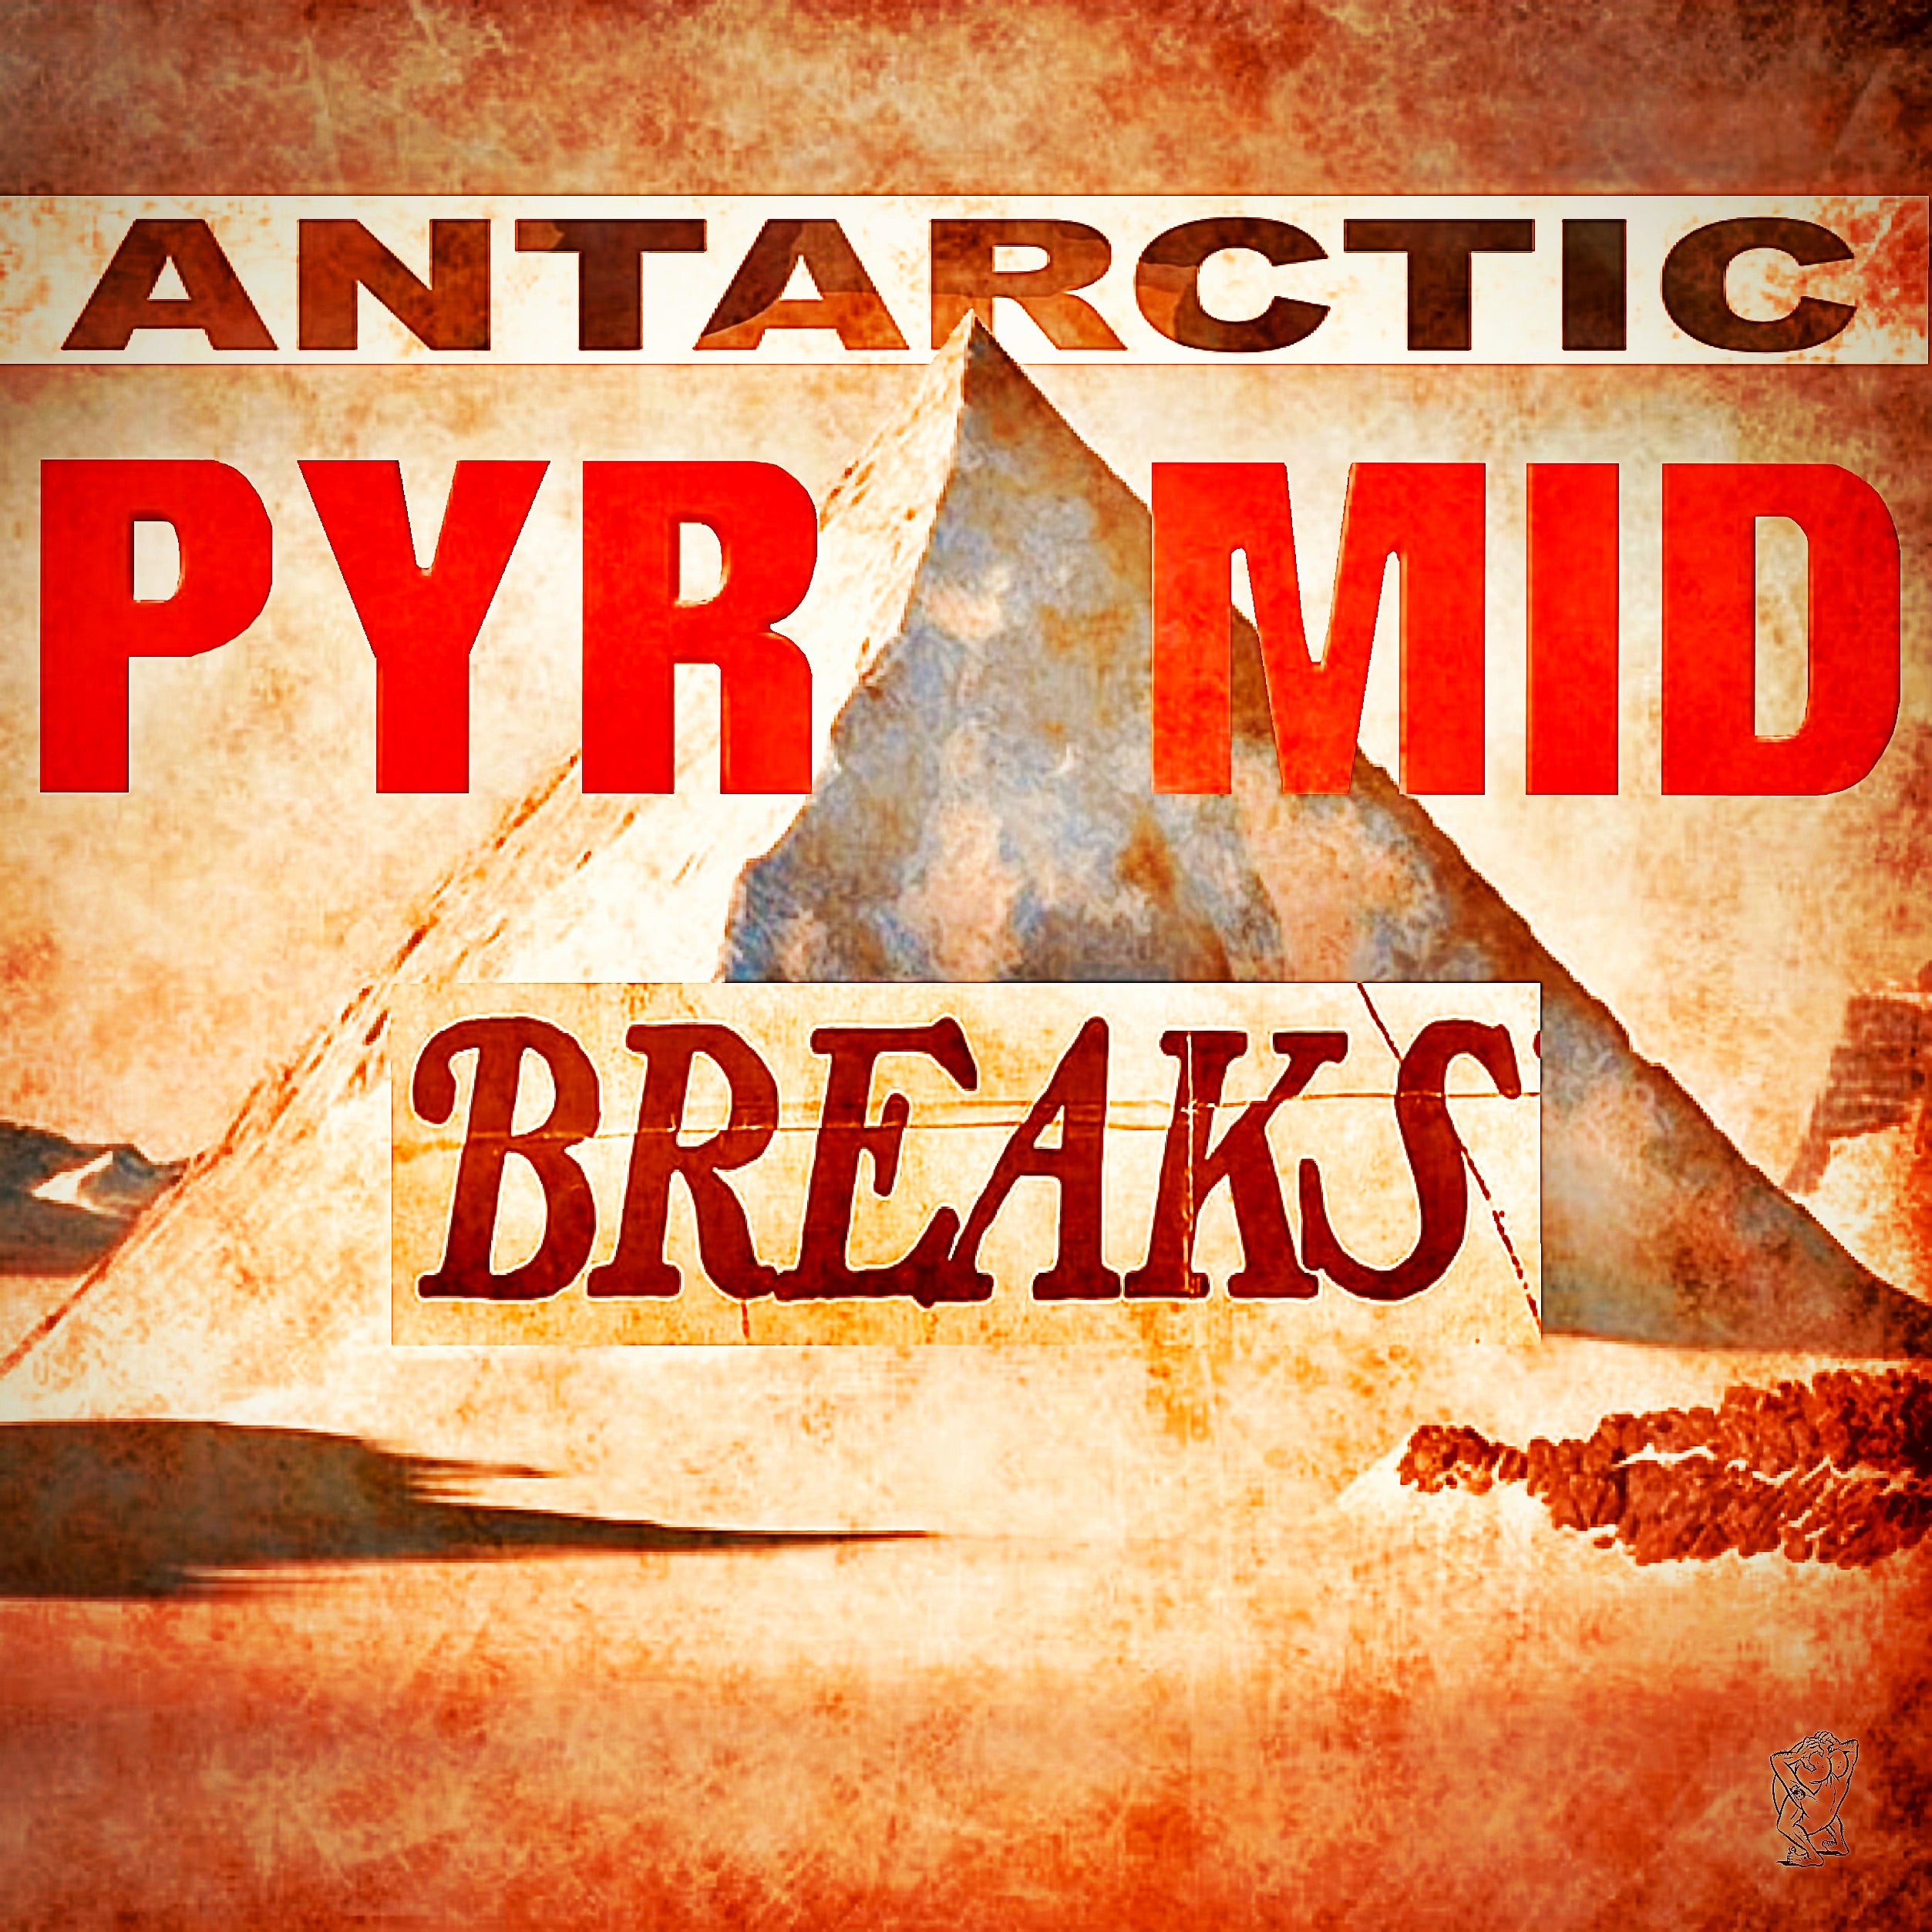 4 ANTARCTIC PYRAMID BREAKS! Unreleased Dirt Style Record Digital release!